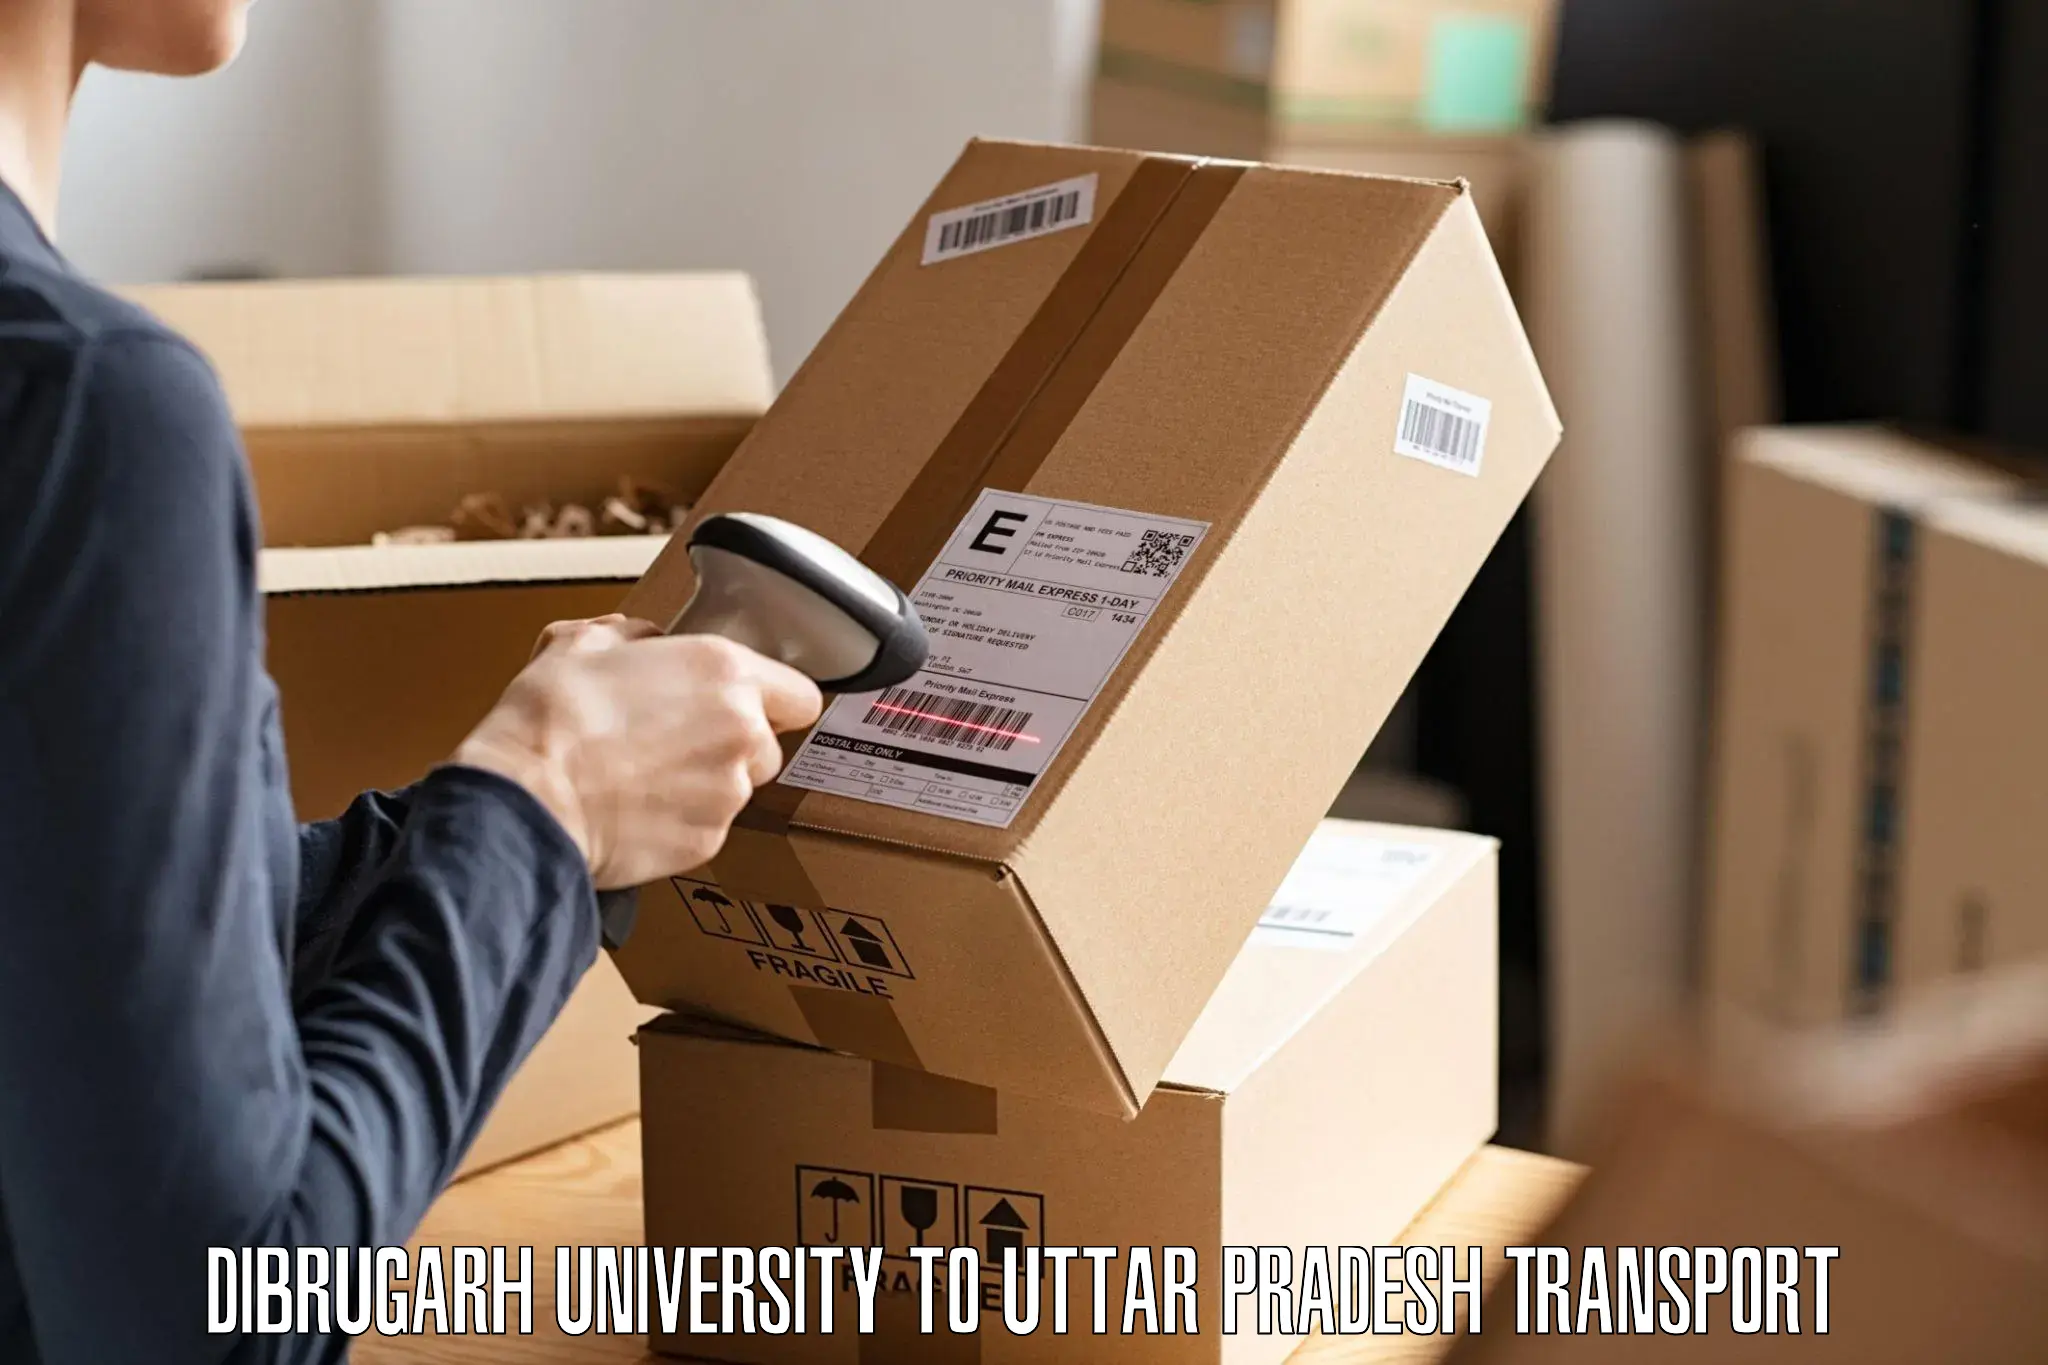 Pick up transport service Dibrugarh University to Mariahu